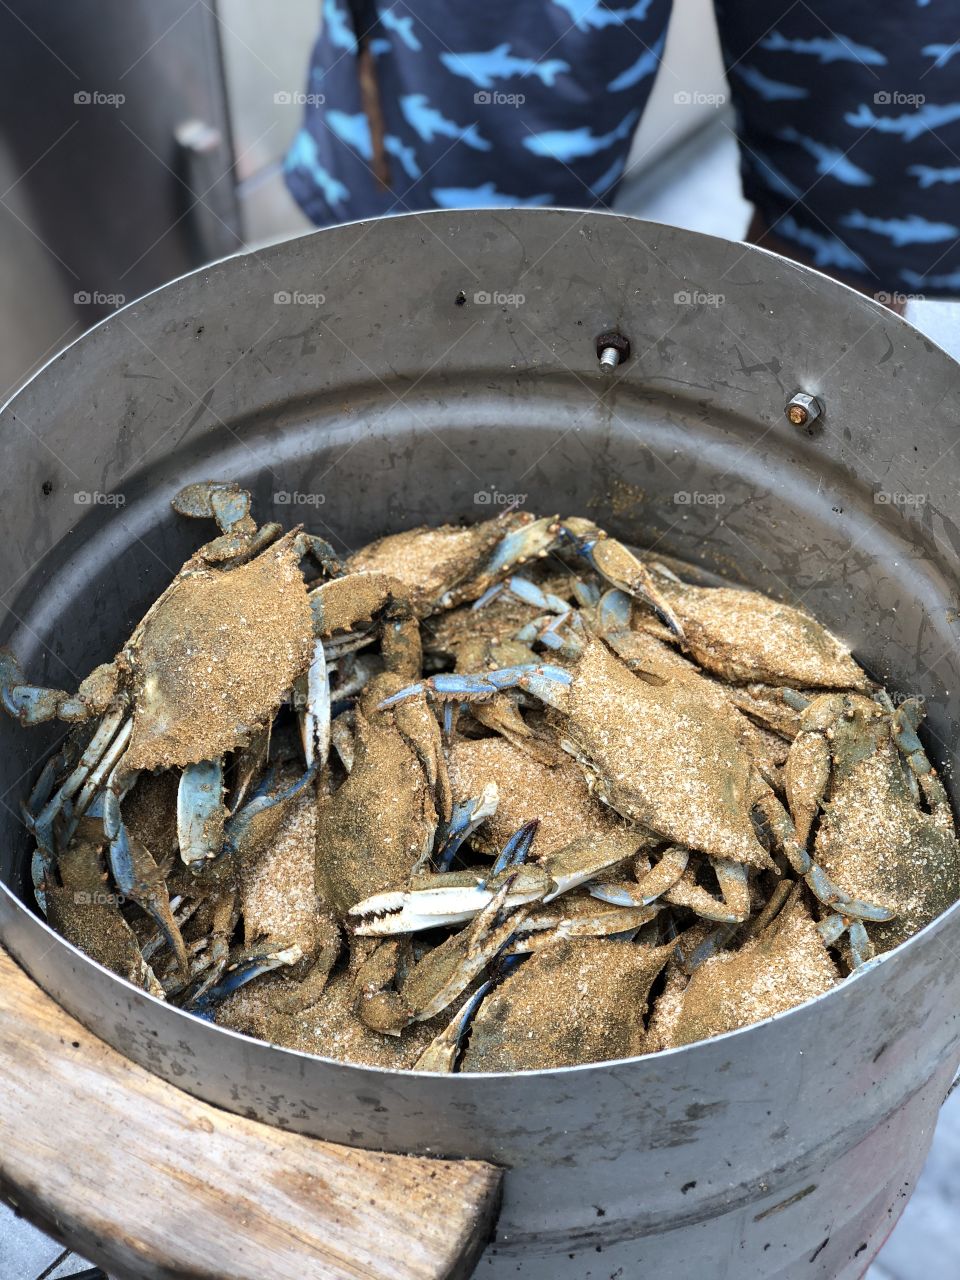 Blue crab season. Old bay. Family fun. Good times. Crab feast. Crab boil. Got crabs? 